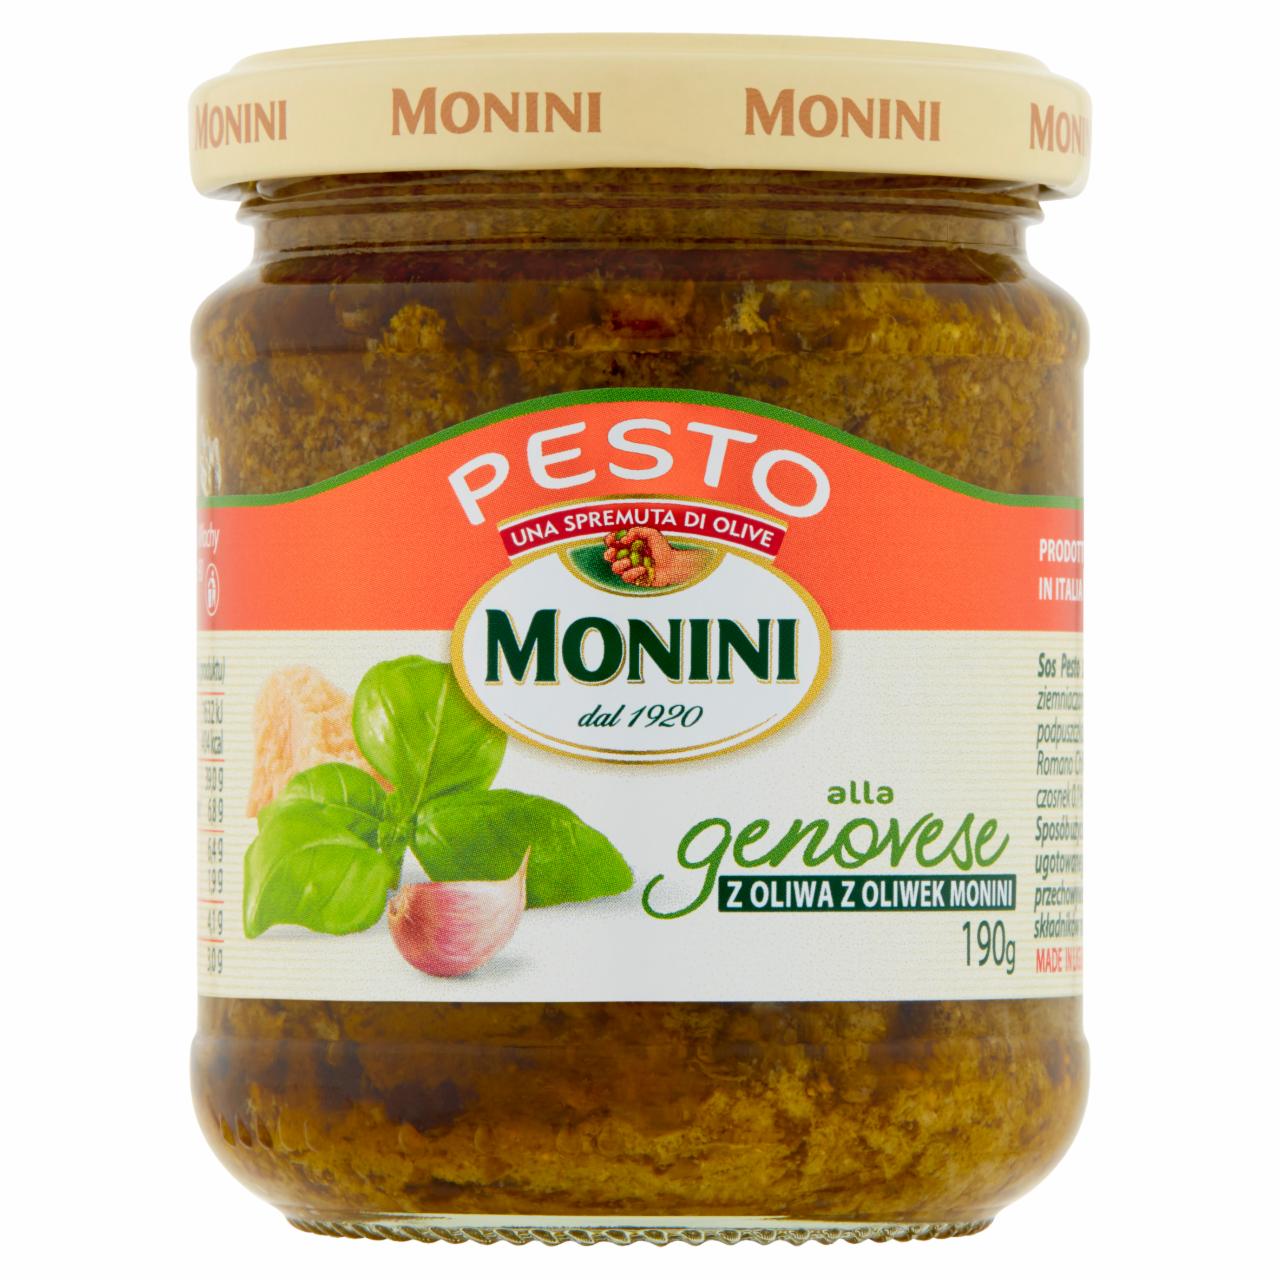 Zdjęcia - Pesto alla genovese Monini